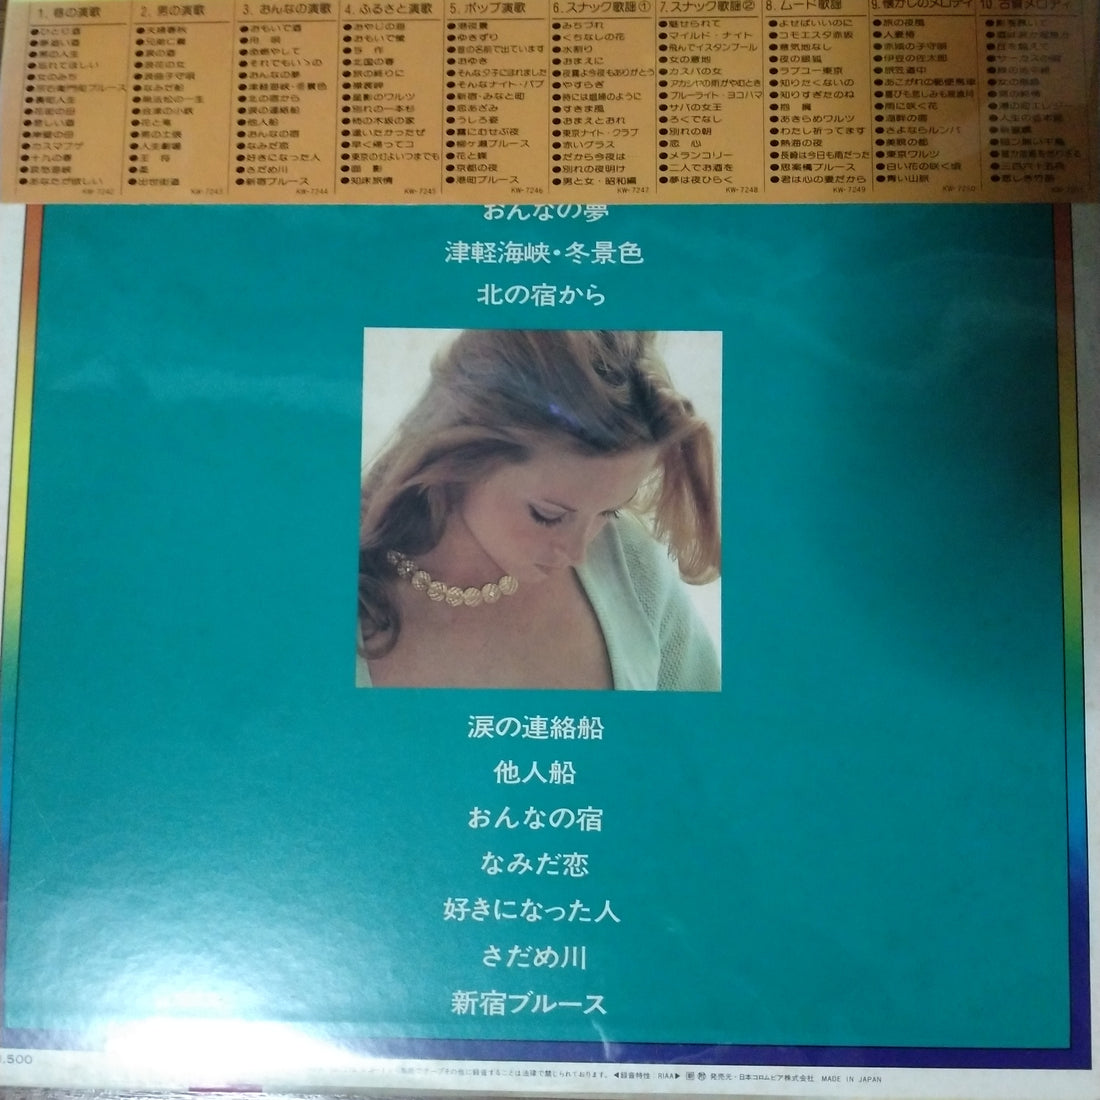 Columbia Orchestra  - おんなの演歌 おもいで酒 / 涙の連絡船 (Vinyl) (VG+)